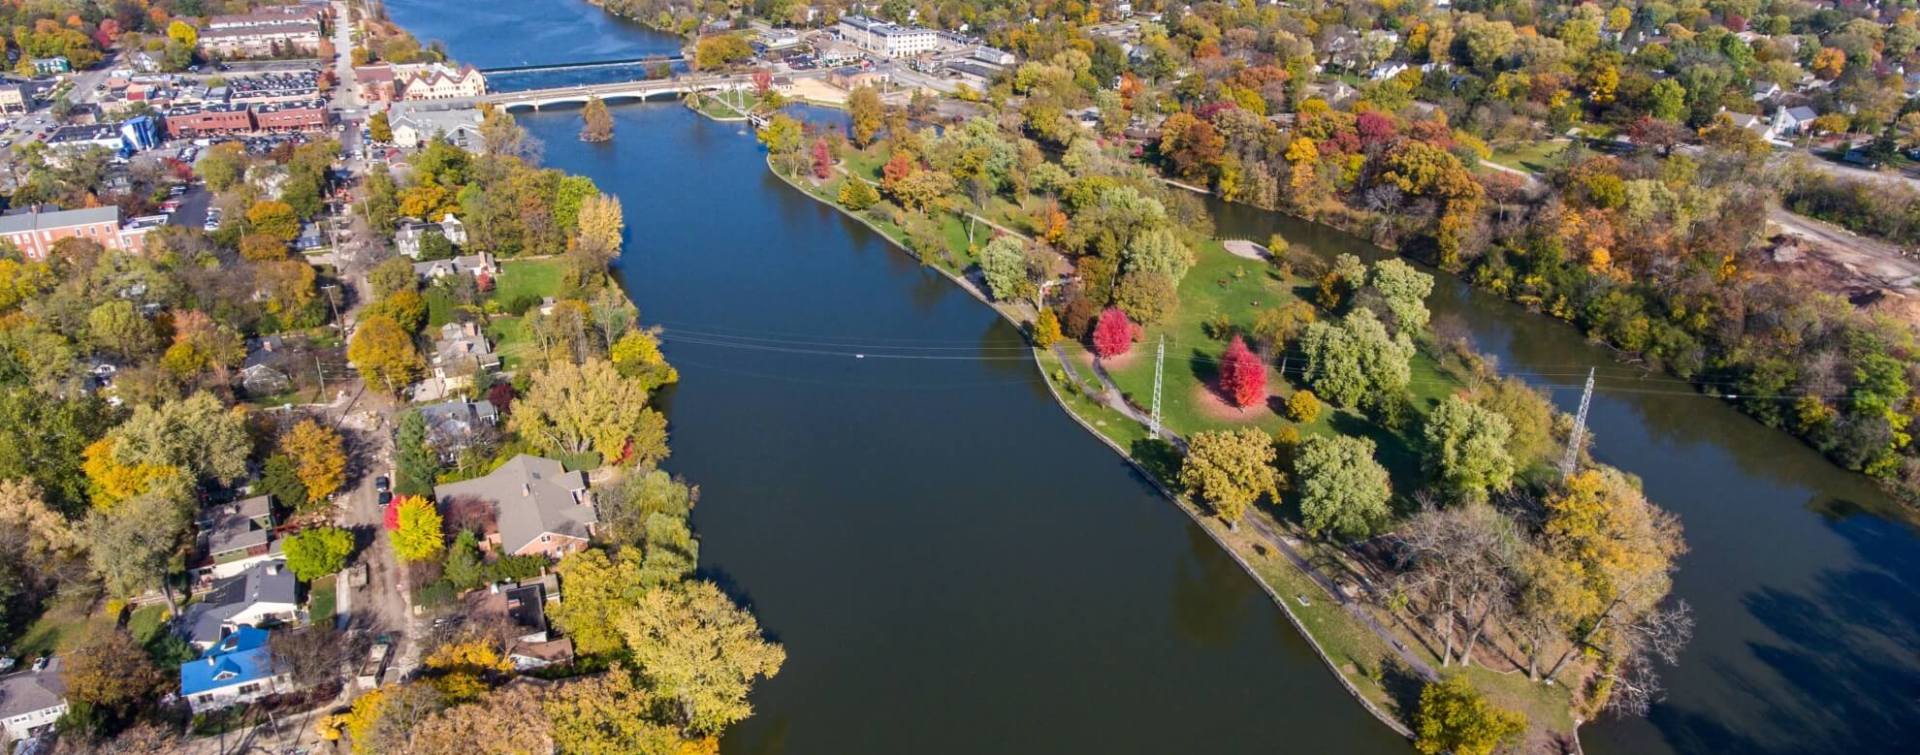 aerial view of Geneva Illinois, the highly affluent suburban submarket of Chicago